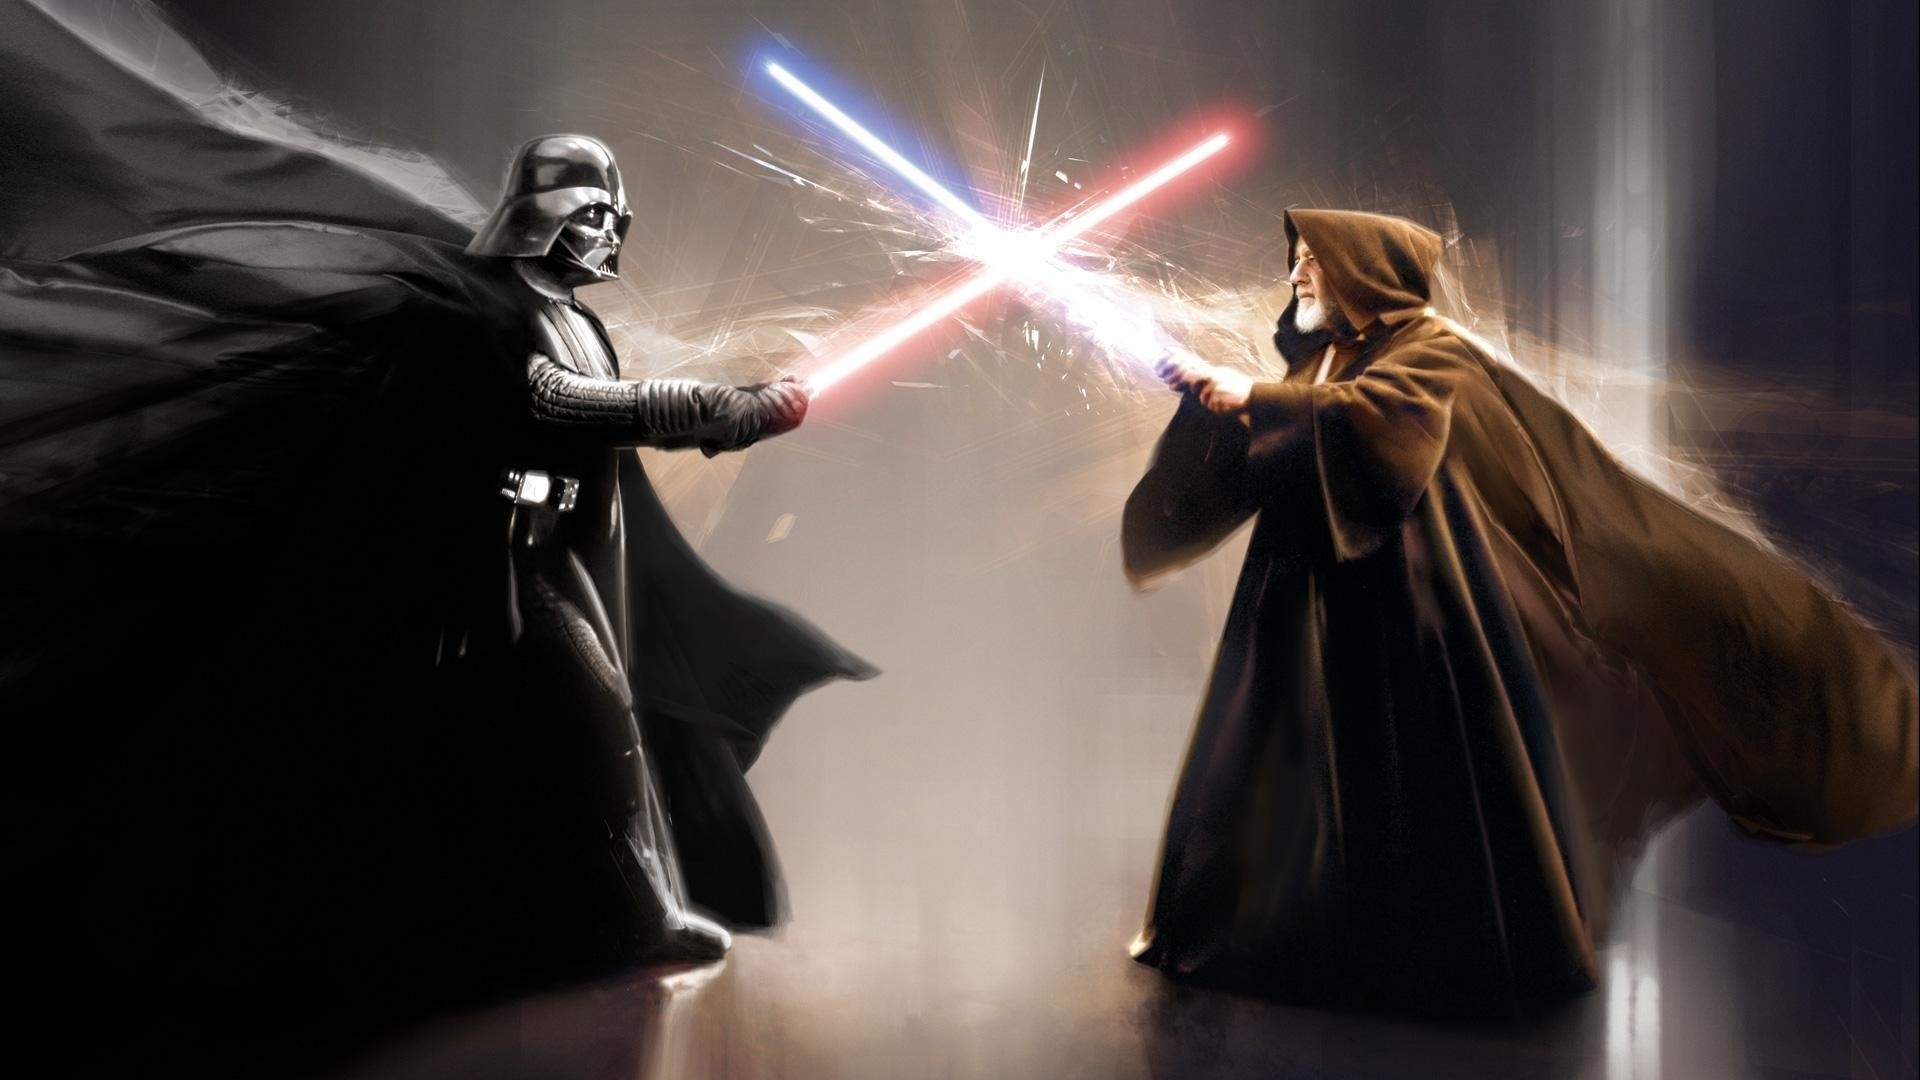 1920x1080 Darth Vader Obi Wan Kenobi movies star wars sci-fi weapons lightsaber .